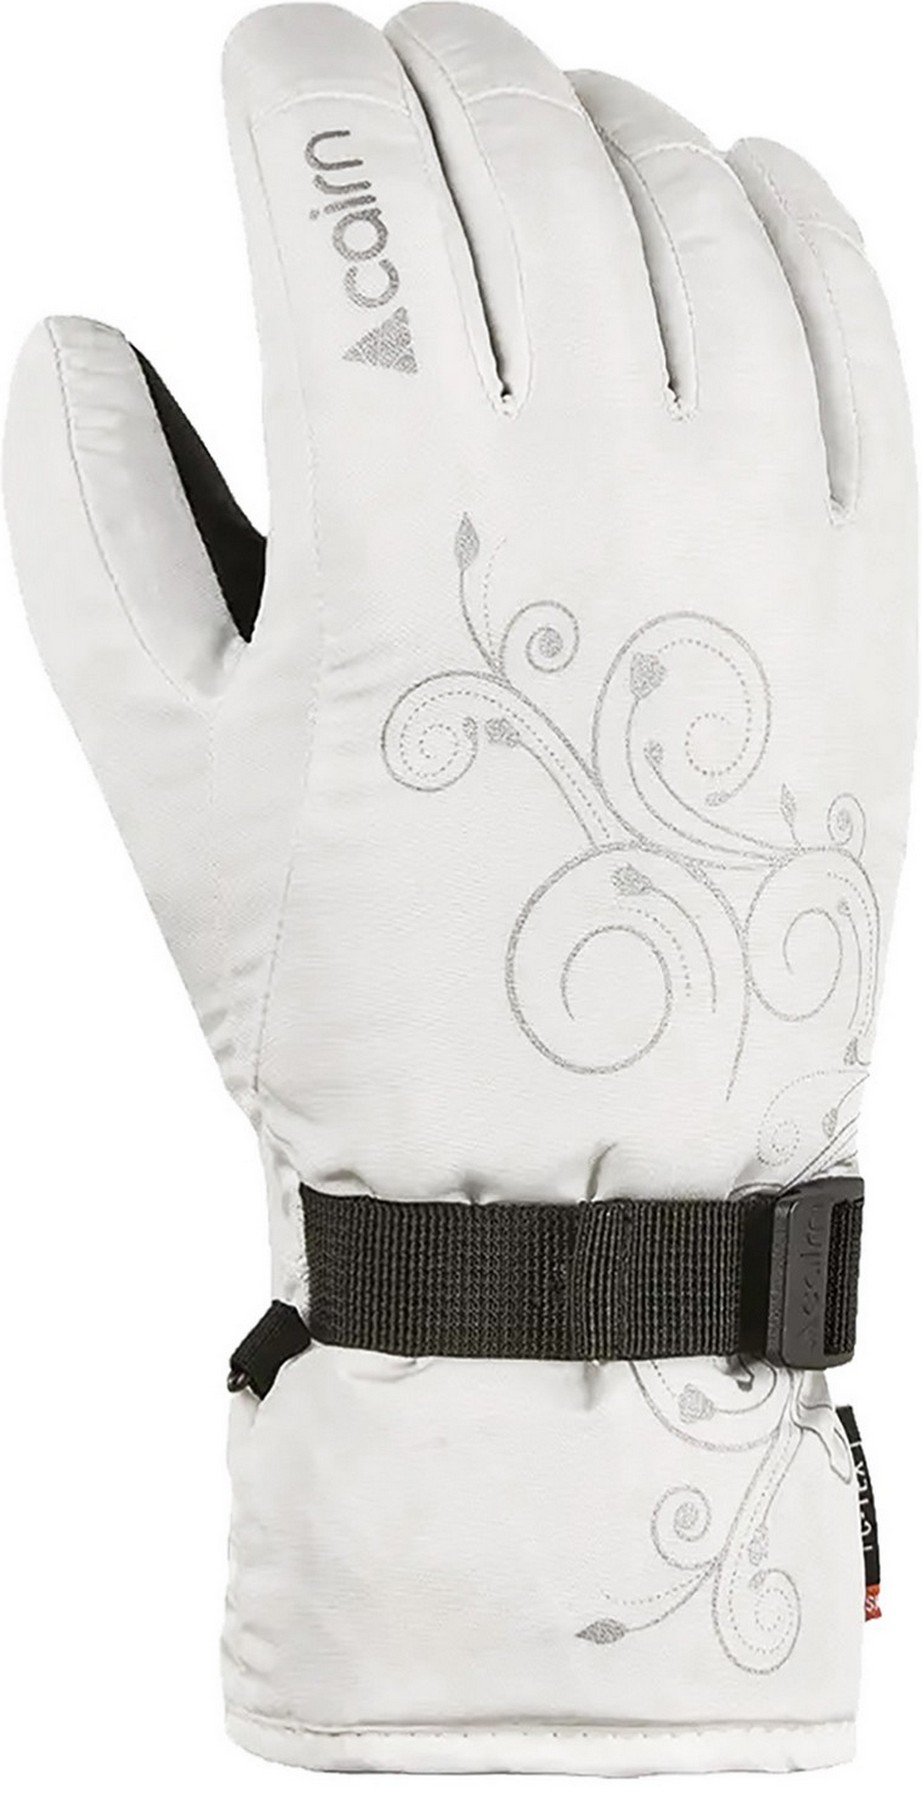 Лыжные перчатки для взрослых Cairn Augusta W white-grey 6.5